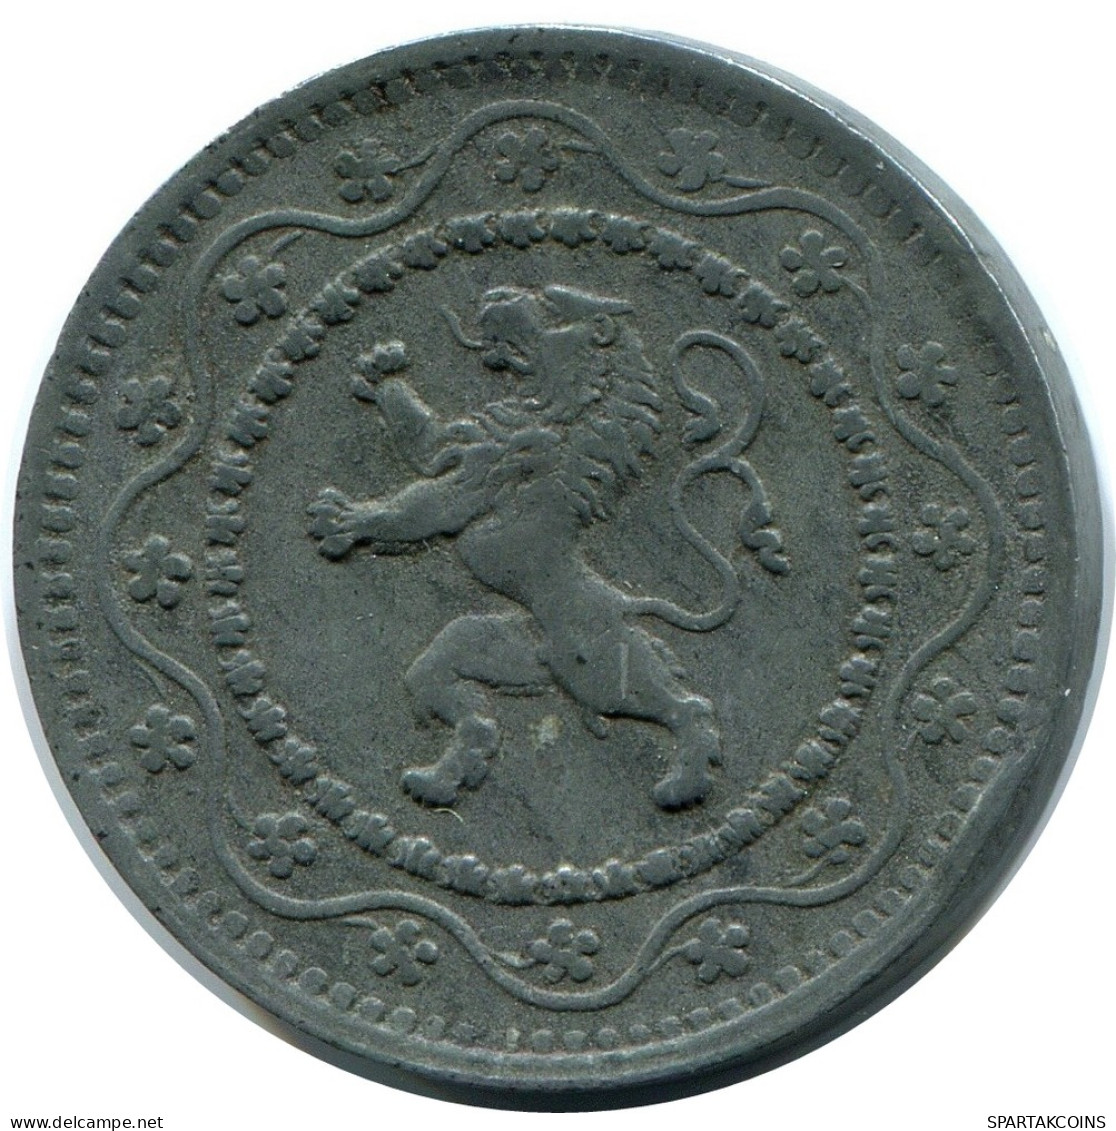 10 CENTIMES 1916 DUTCH Text BELGIUM Coin #BA411.U - 10 Cents